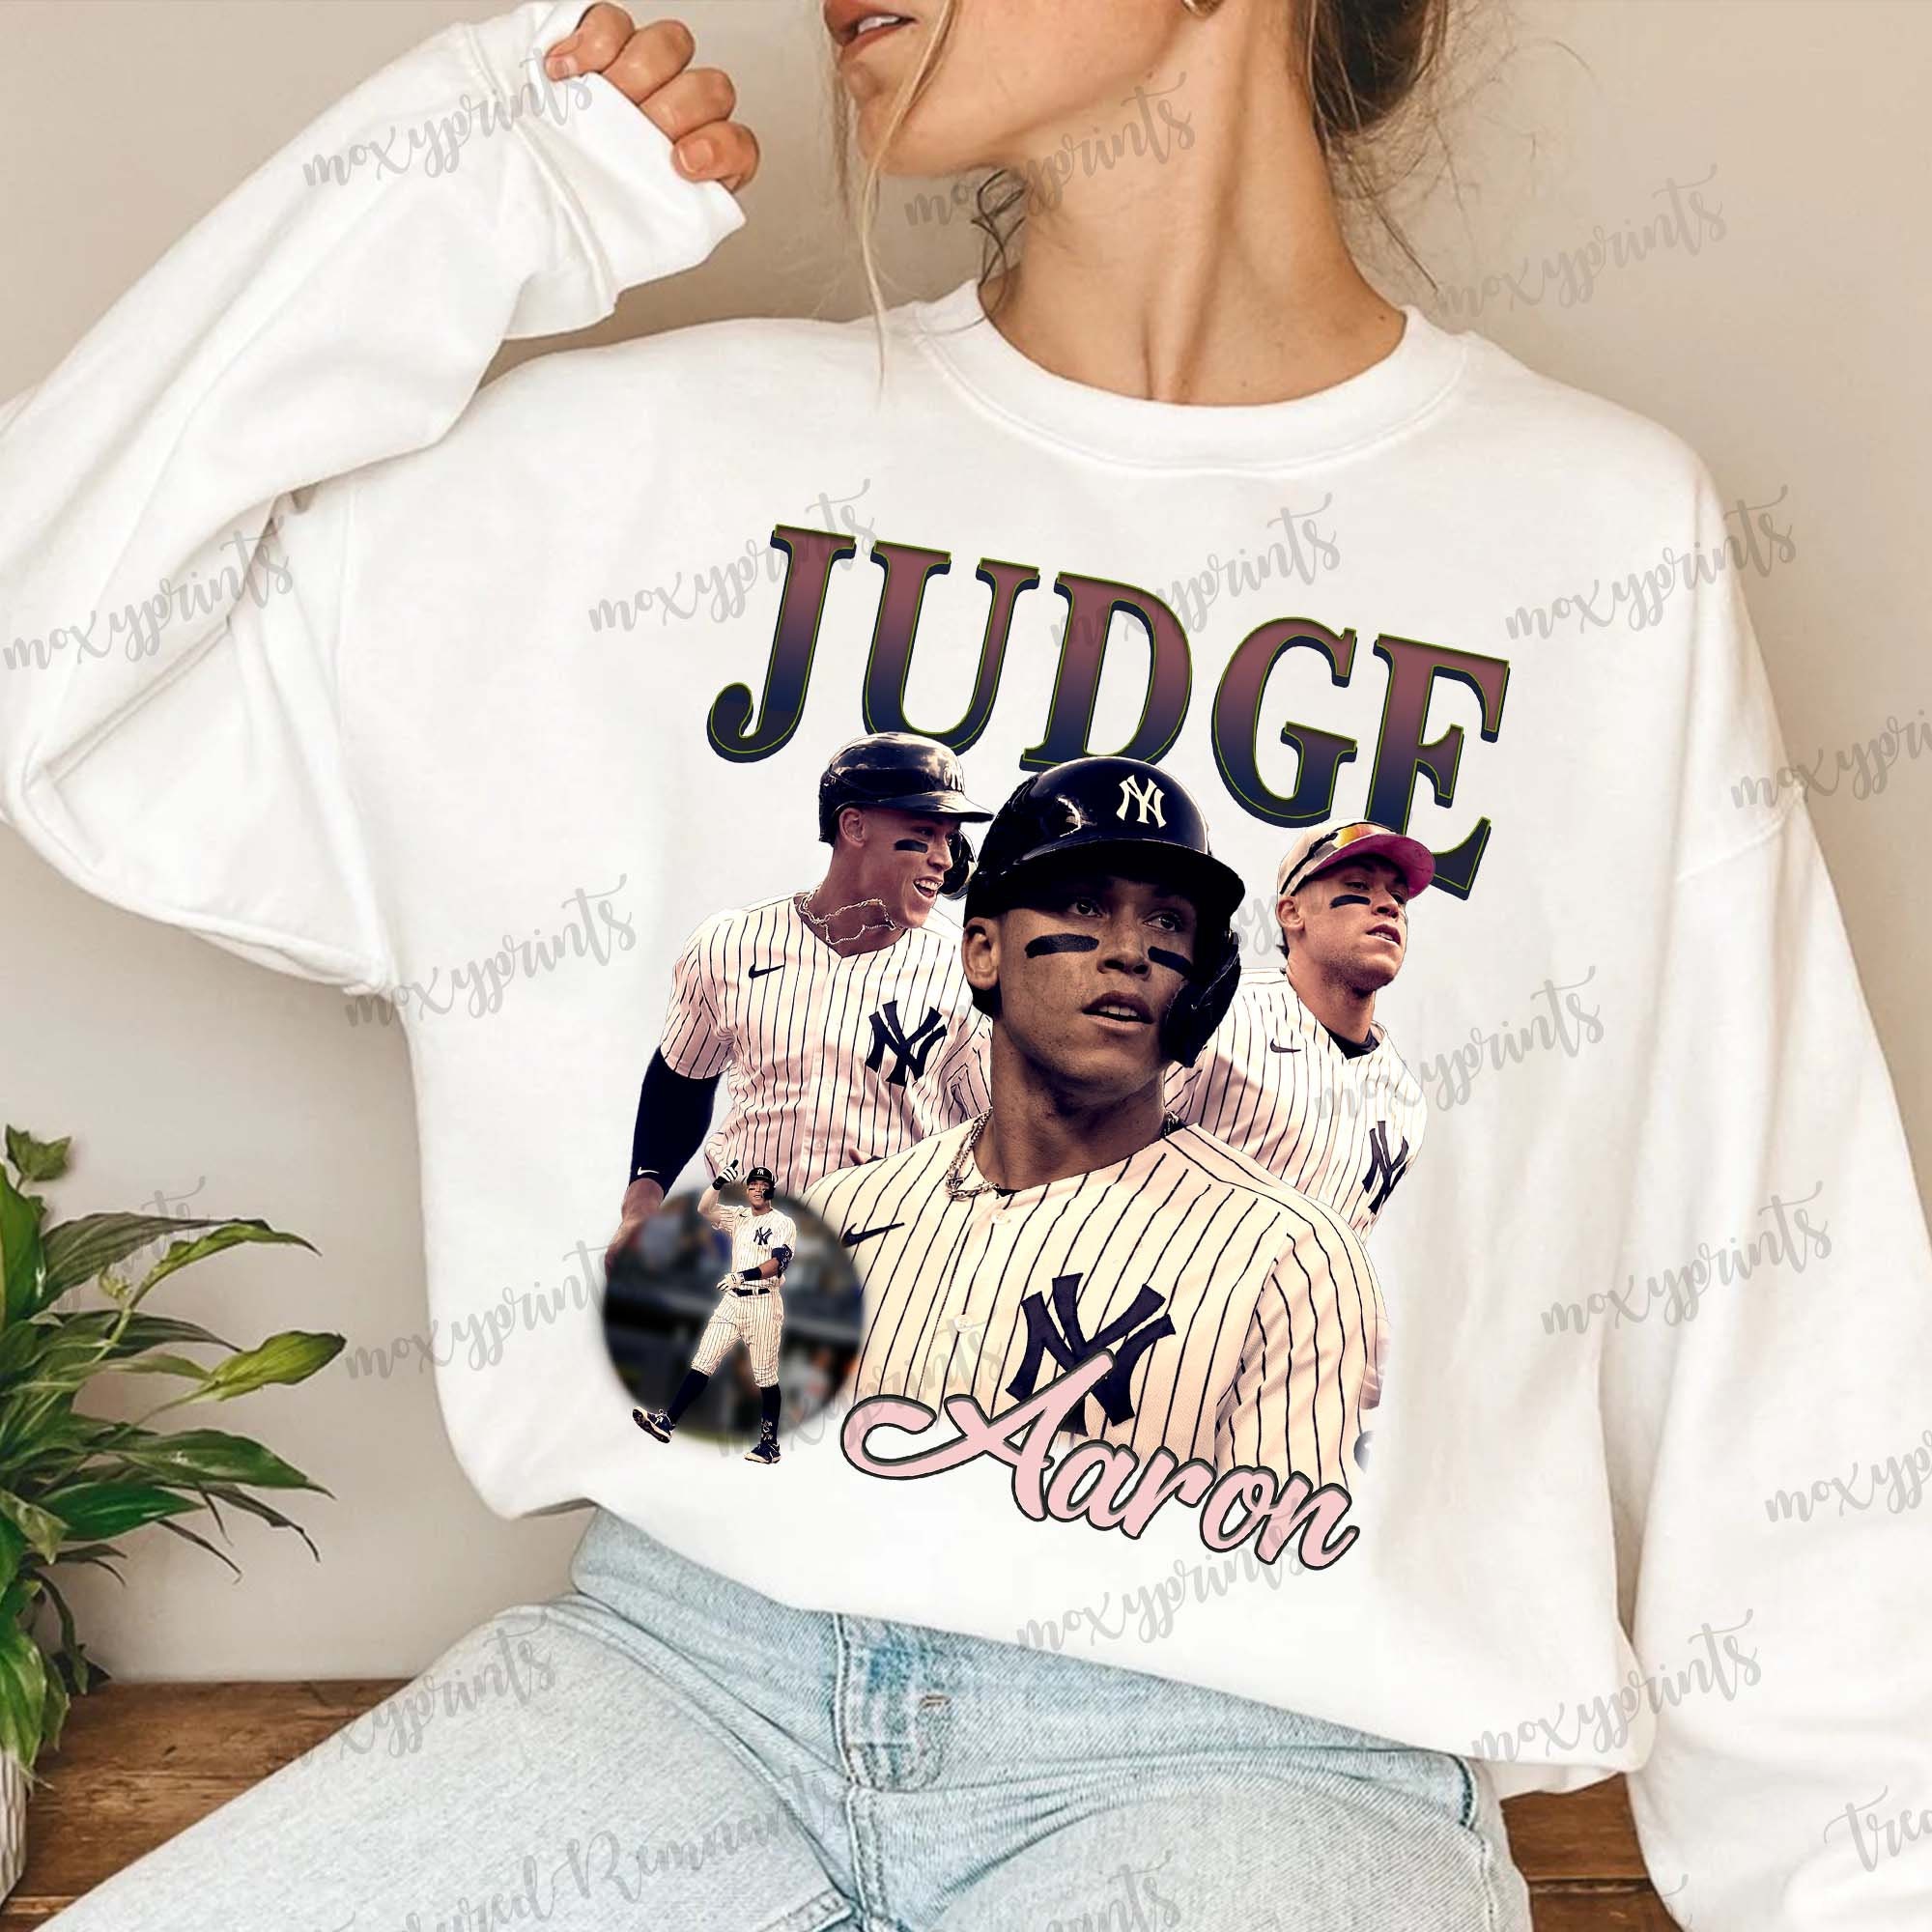 mlb judge shirt